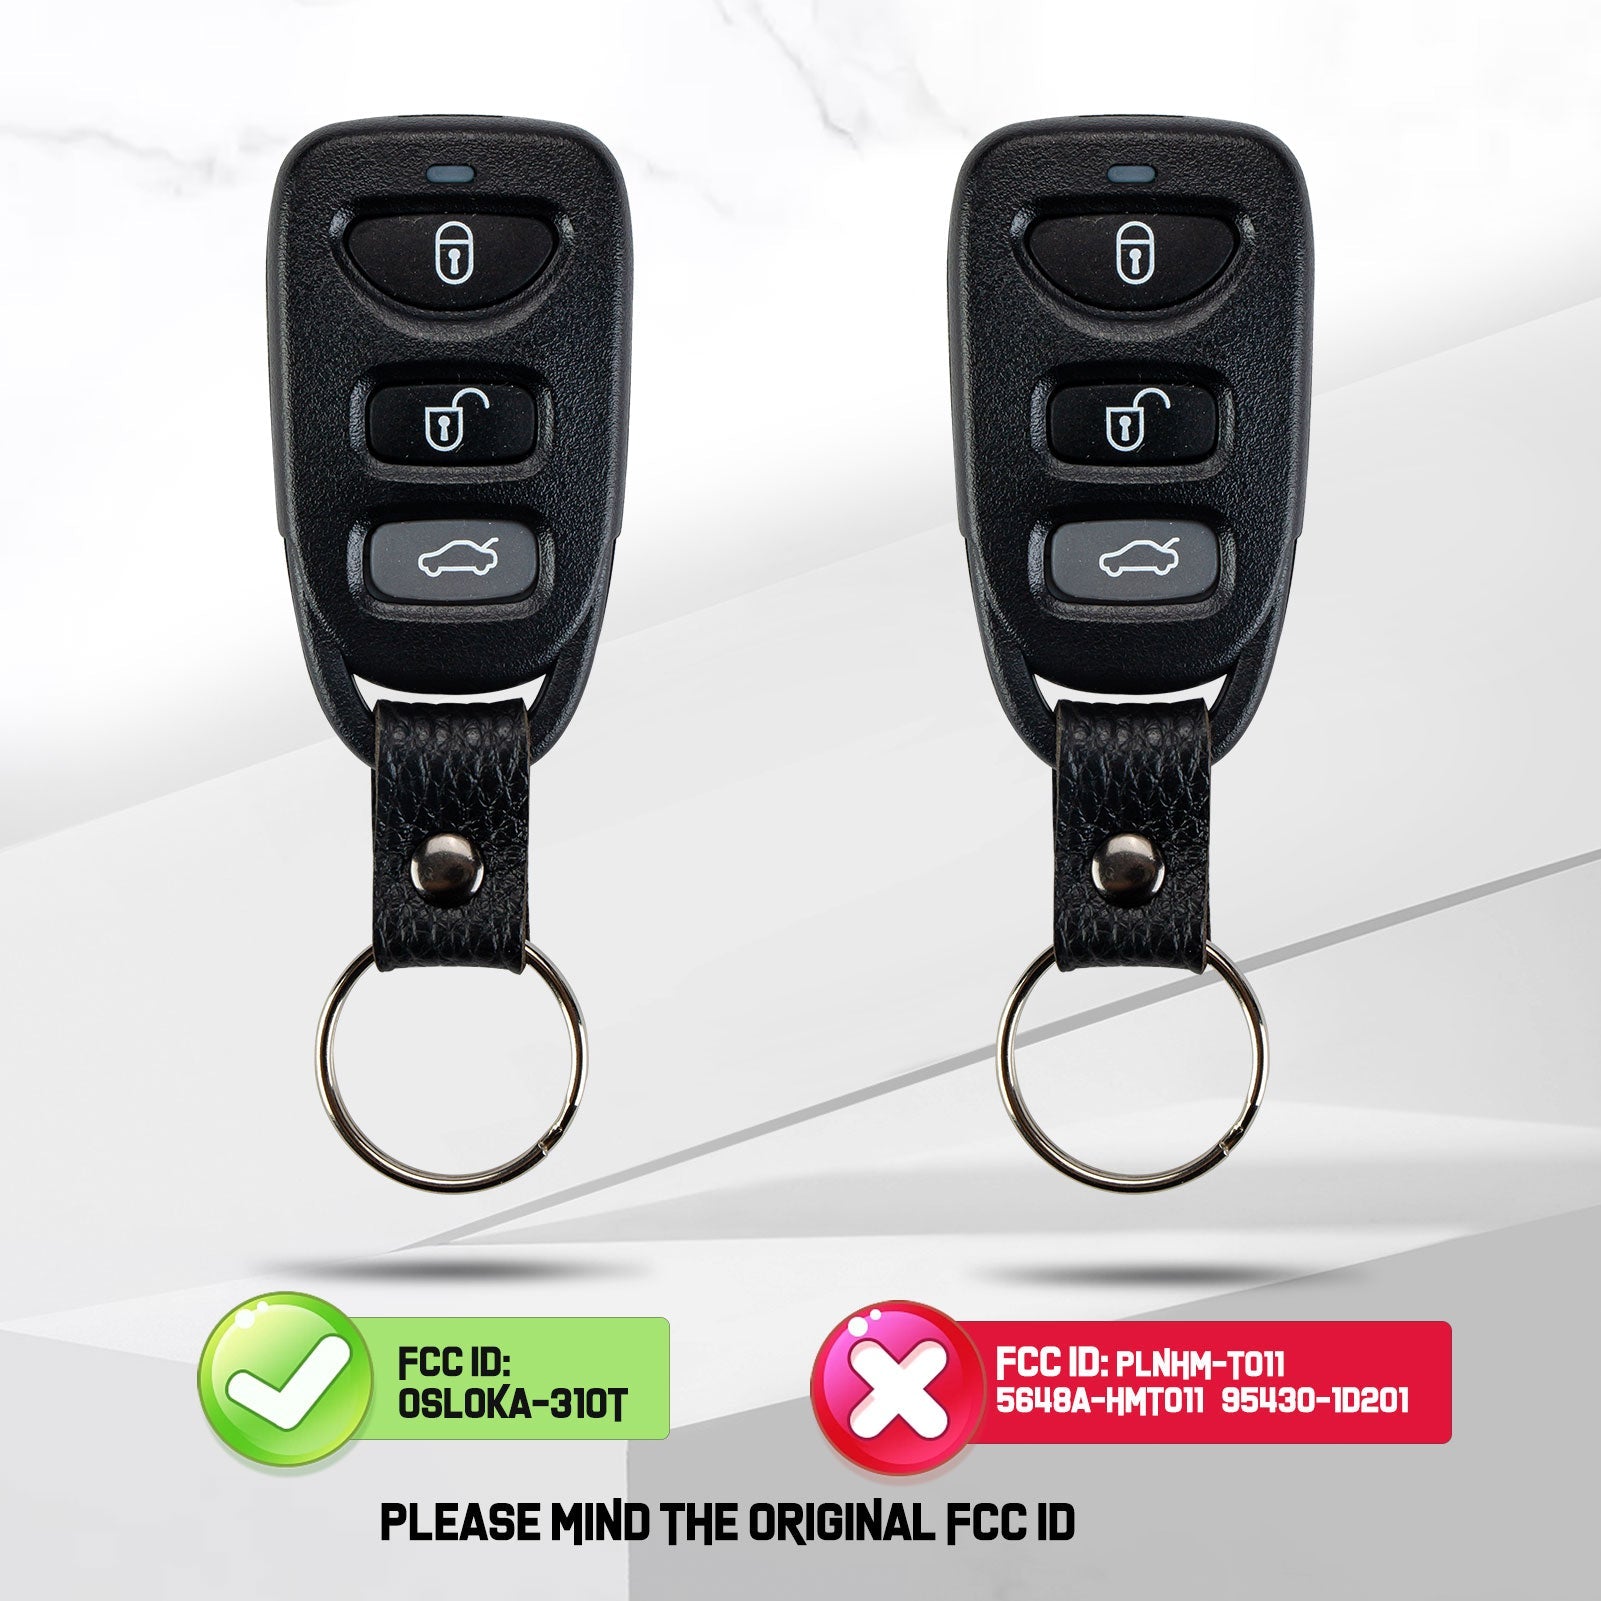 Replacement for Keyless Entry Remote fit for 2007-2010 Hyundai Elantra 2006-2010 Hyundai Sonata OSLOKA-310T  KR-K4RB